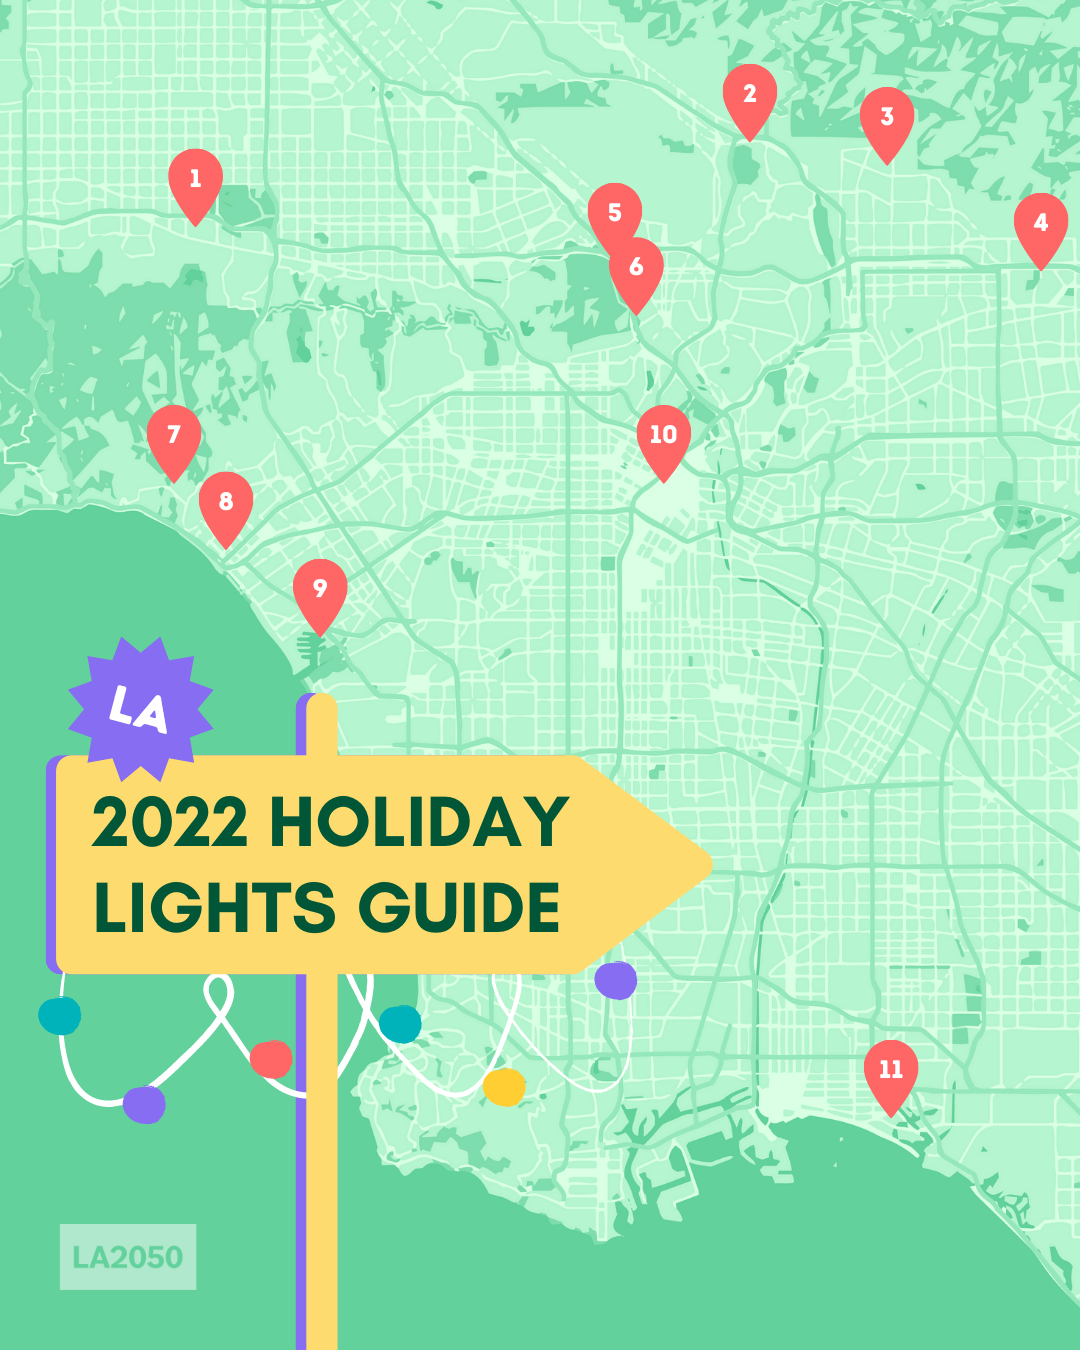 11 LA Events to Light Up Your Holiday Season LA2050